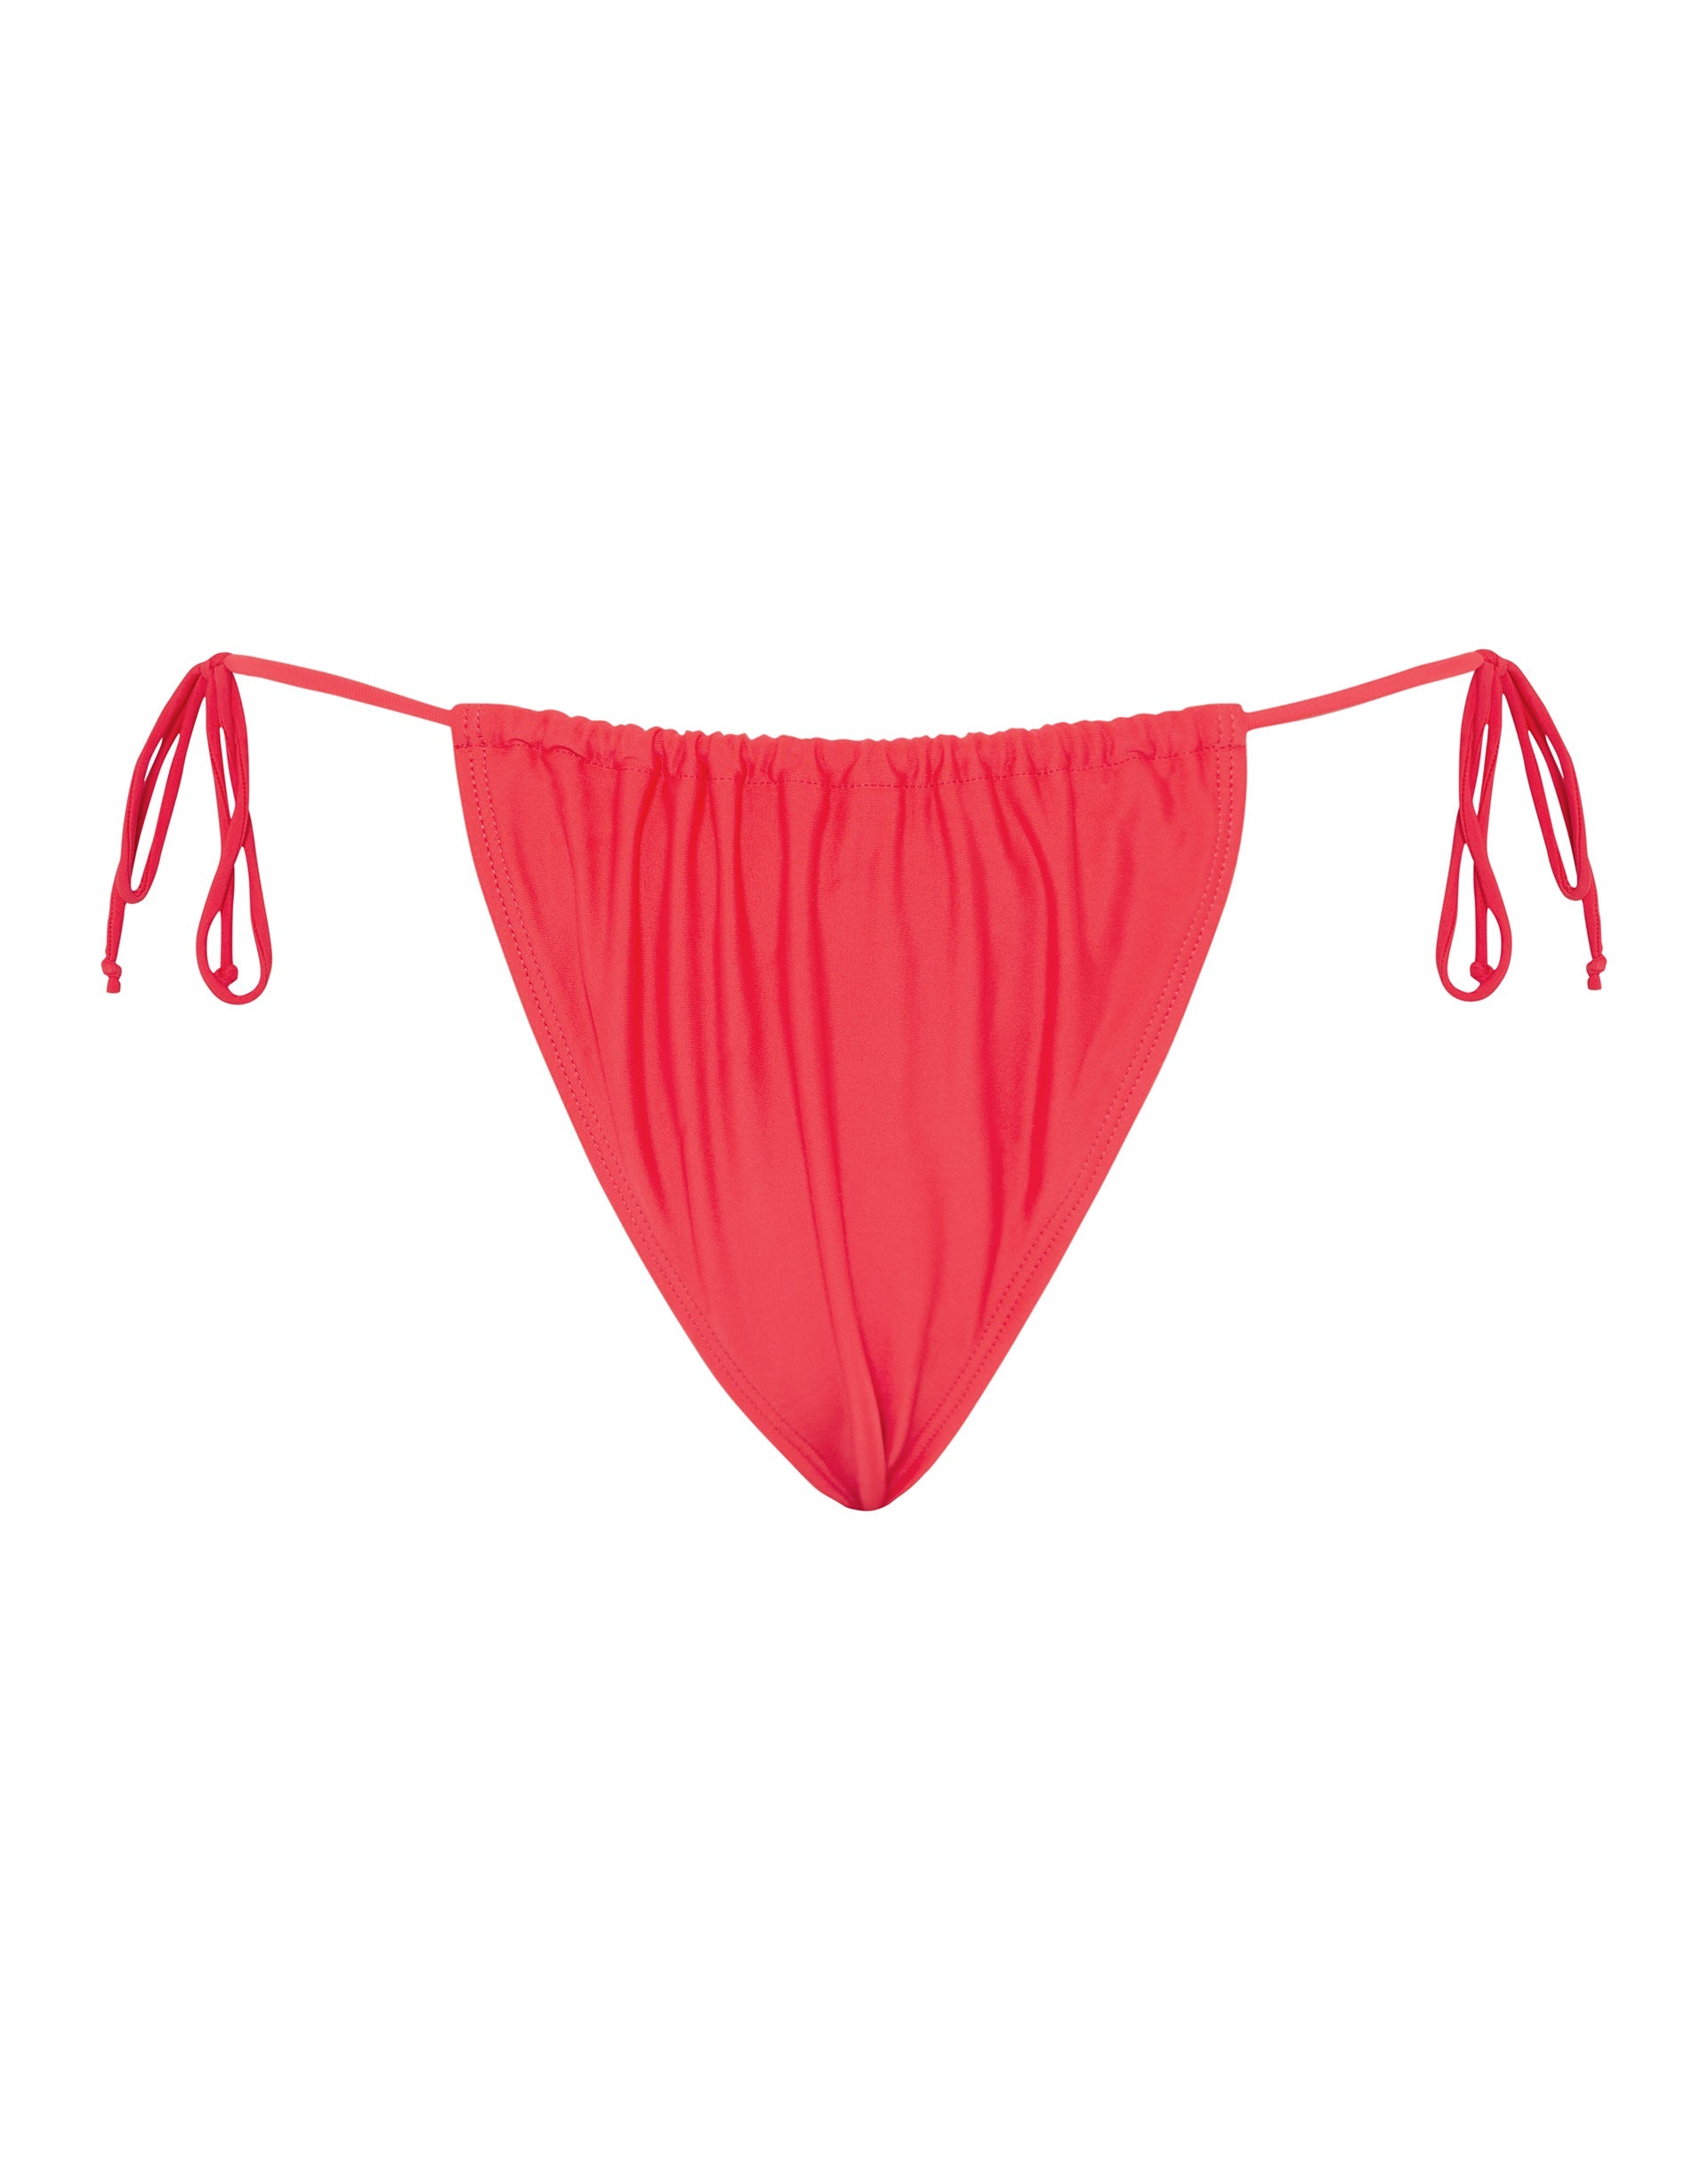 Image of Leyna Bikini Bottom in Scarlet Red